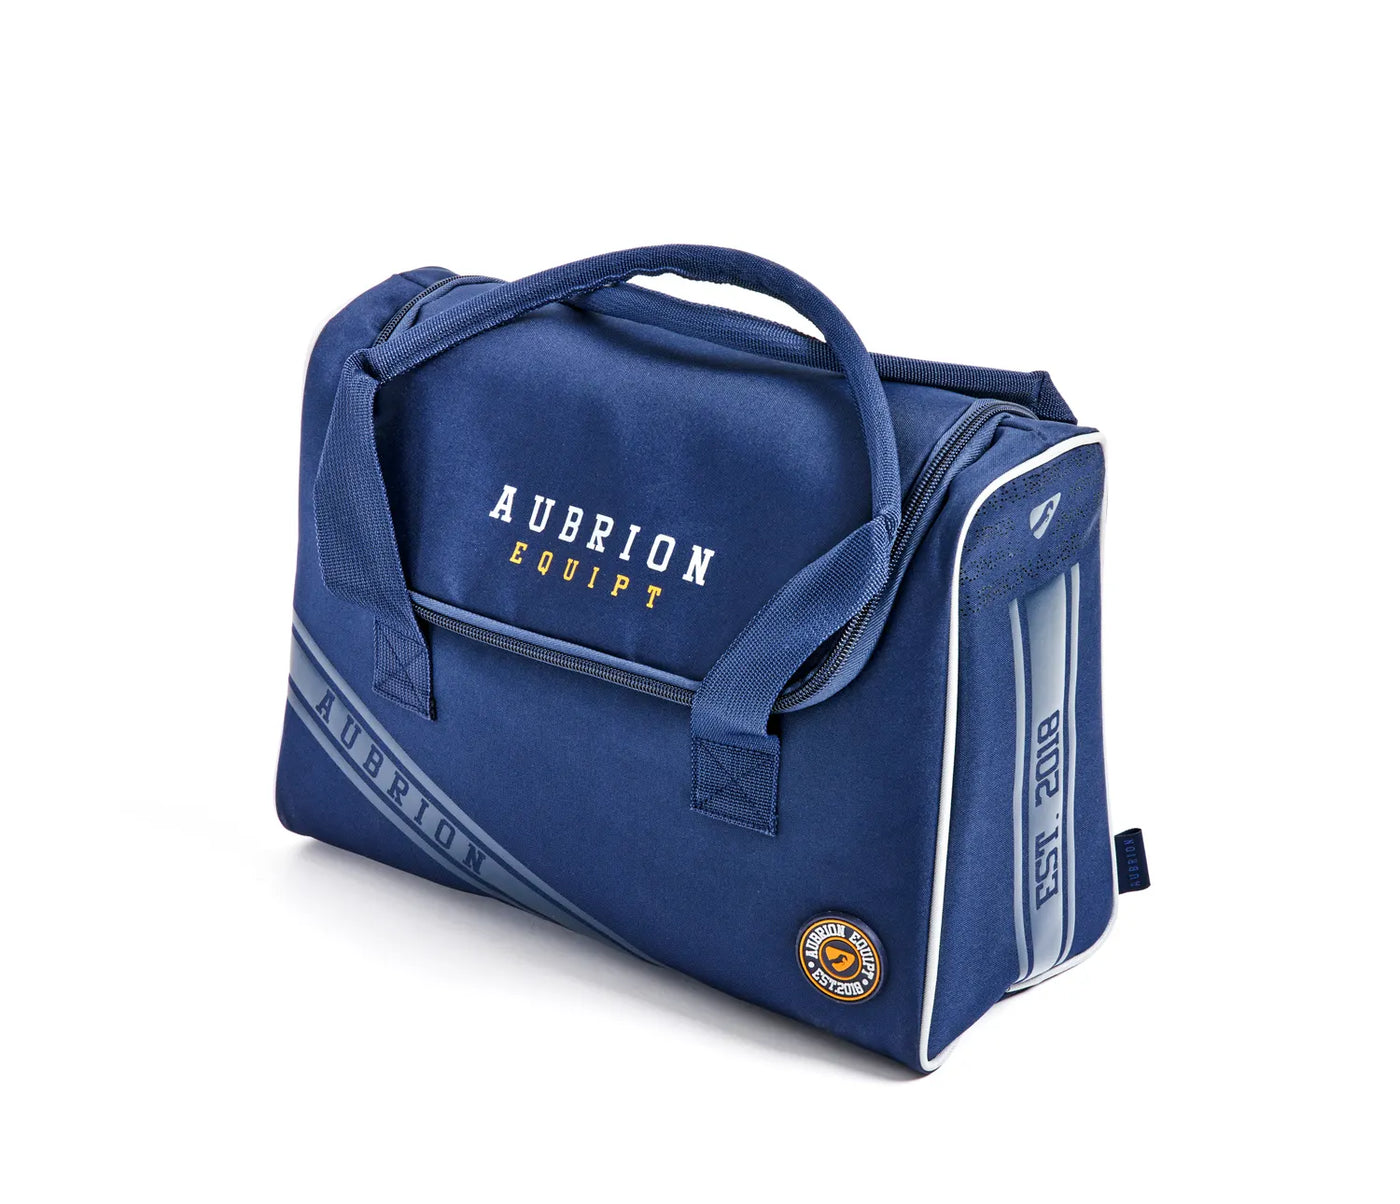 Aubrion Equipt Grooming Kit Bag -5969